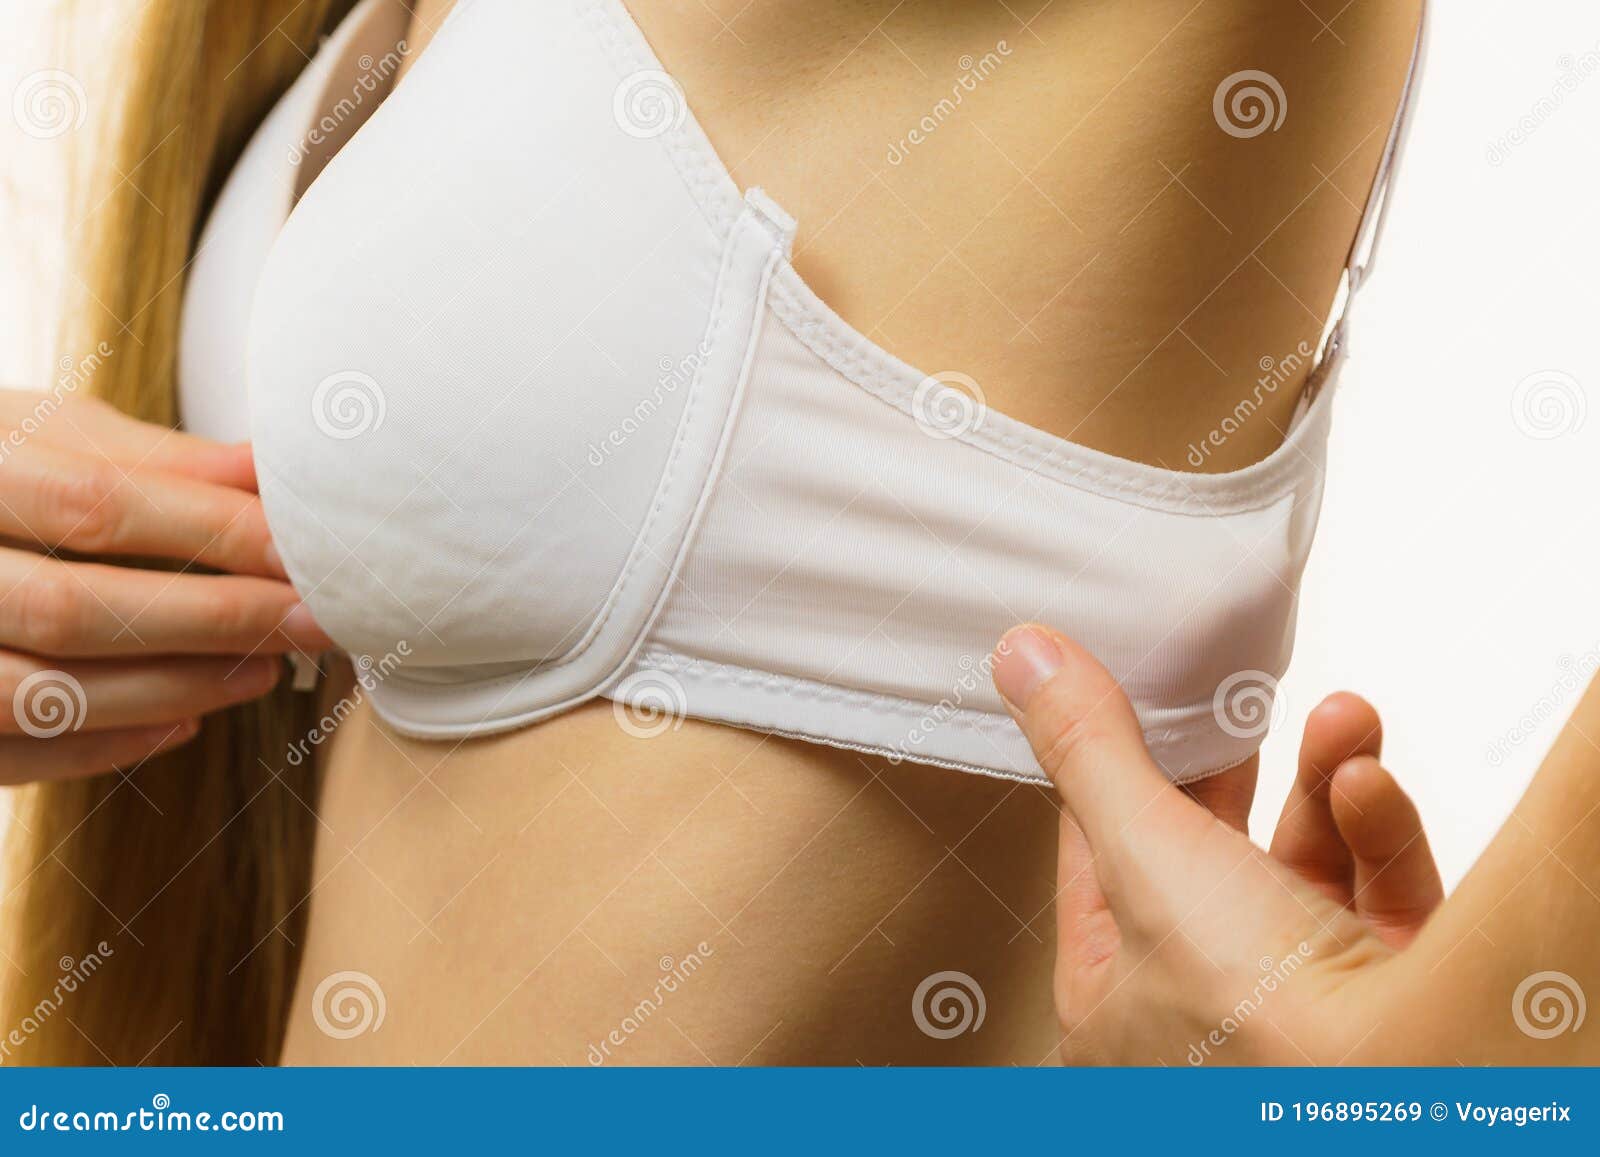 Woman wearing too big bra stock image. Image of woman - 196895269